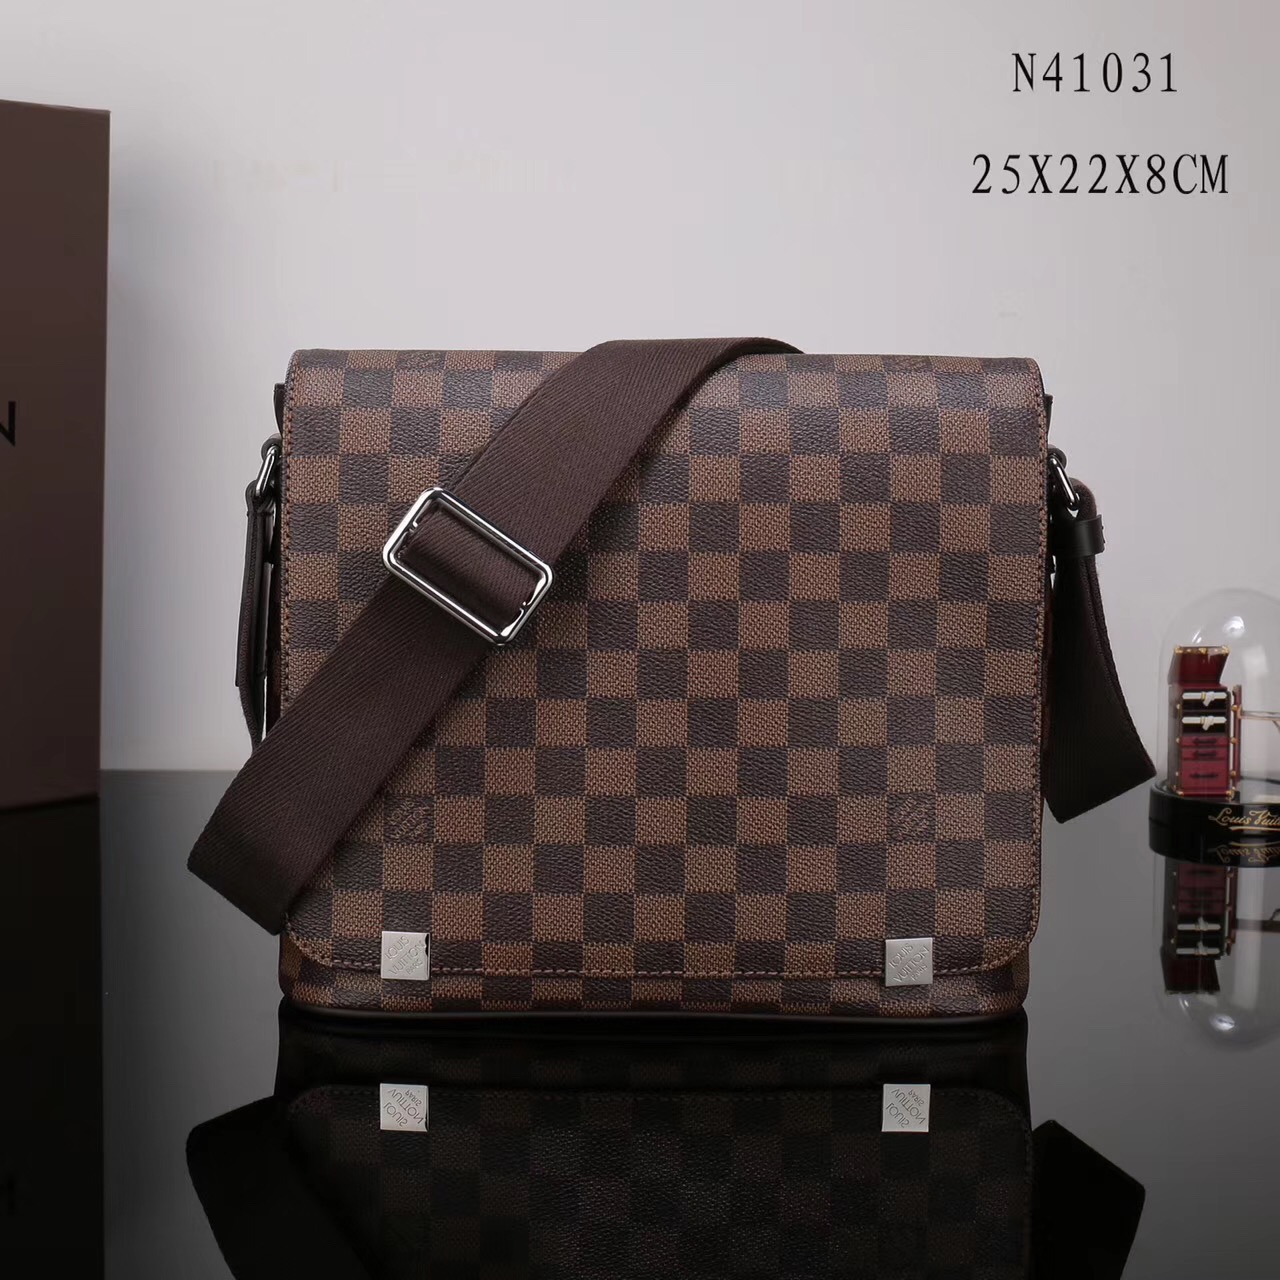 LV Louis Vuitton M41031 District Damier Medium Handbags Graphite bags